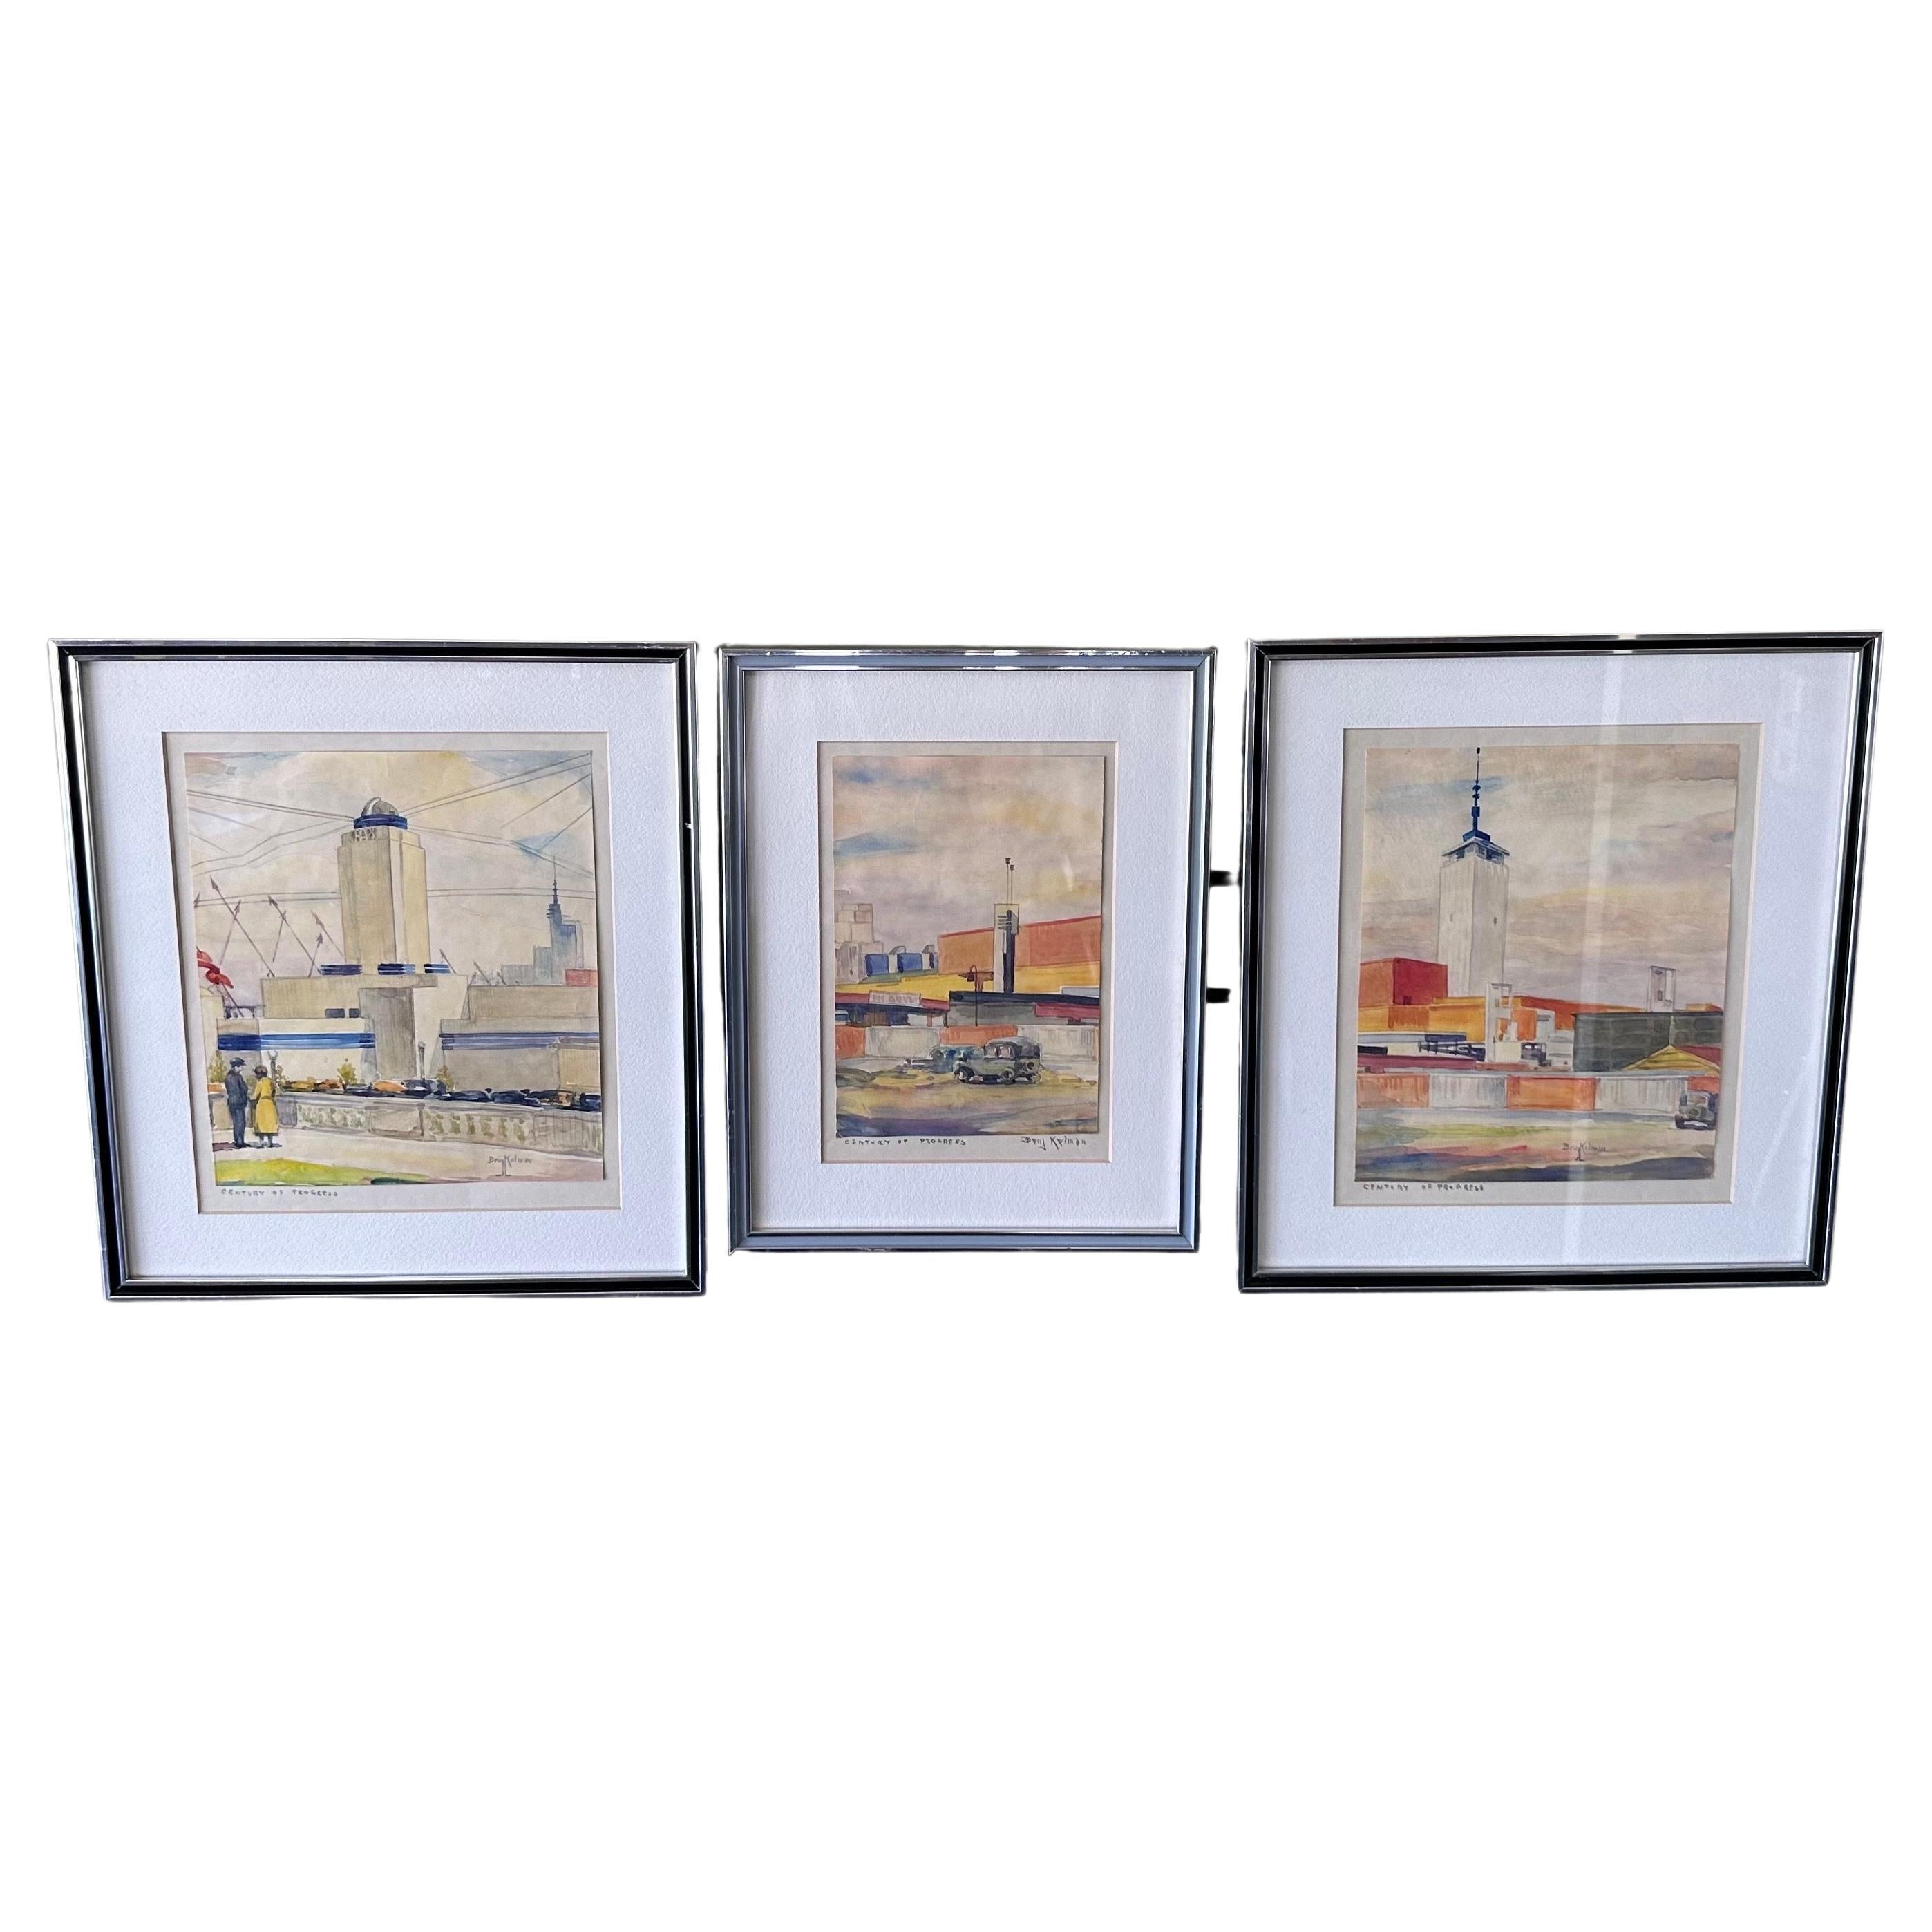 Three Original Watercolor Paintings "Century of Progress" by Benjamin Kelman